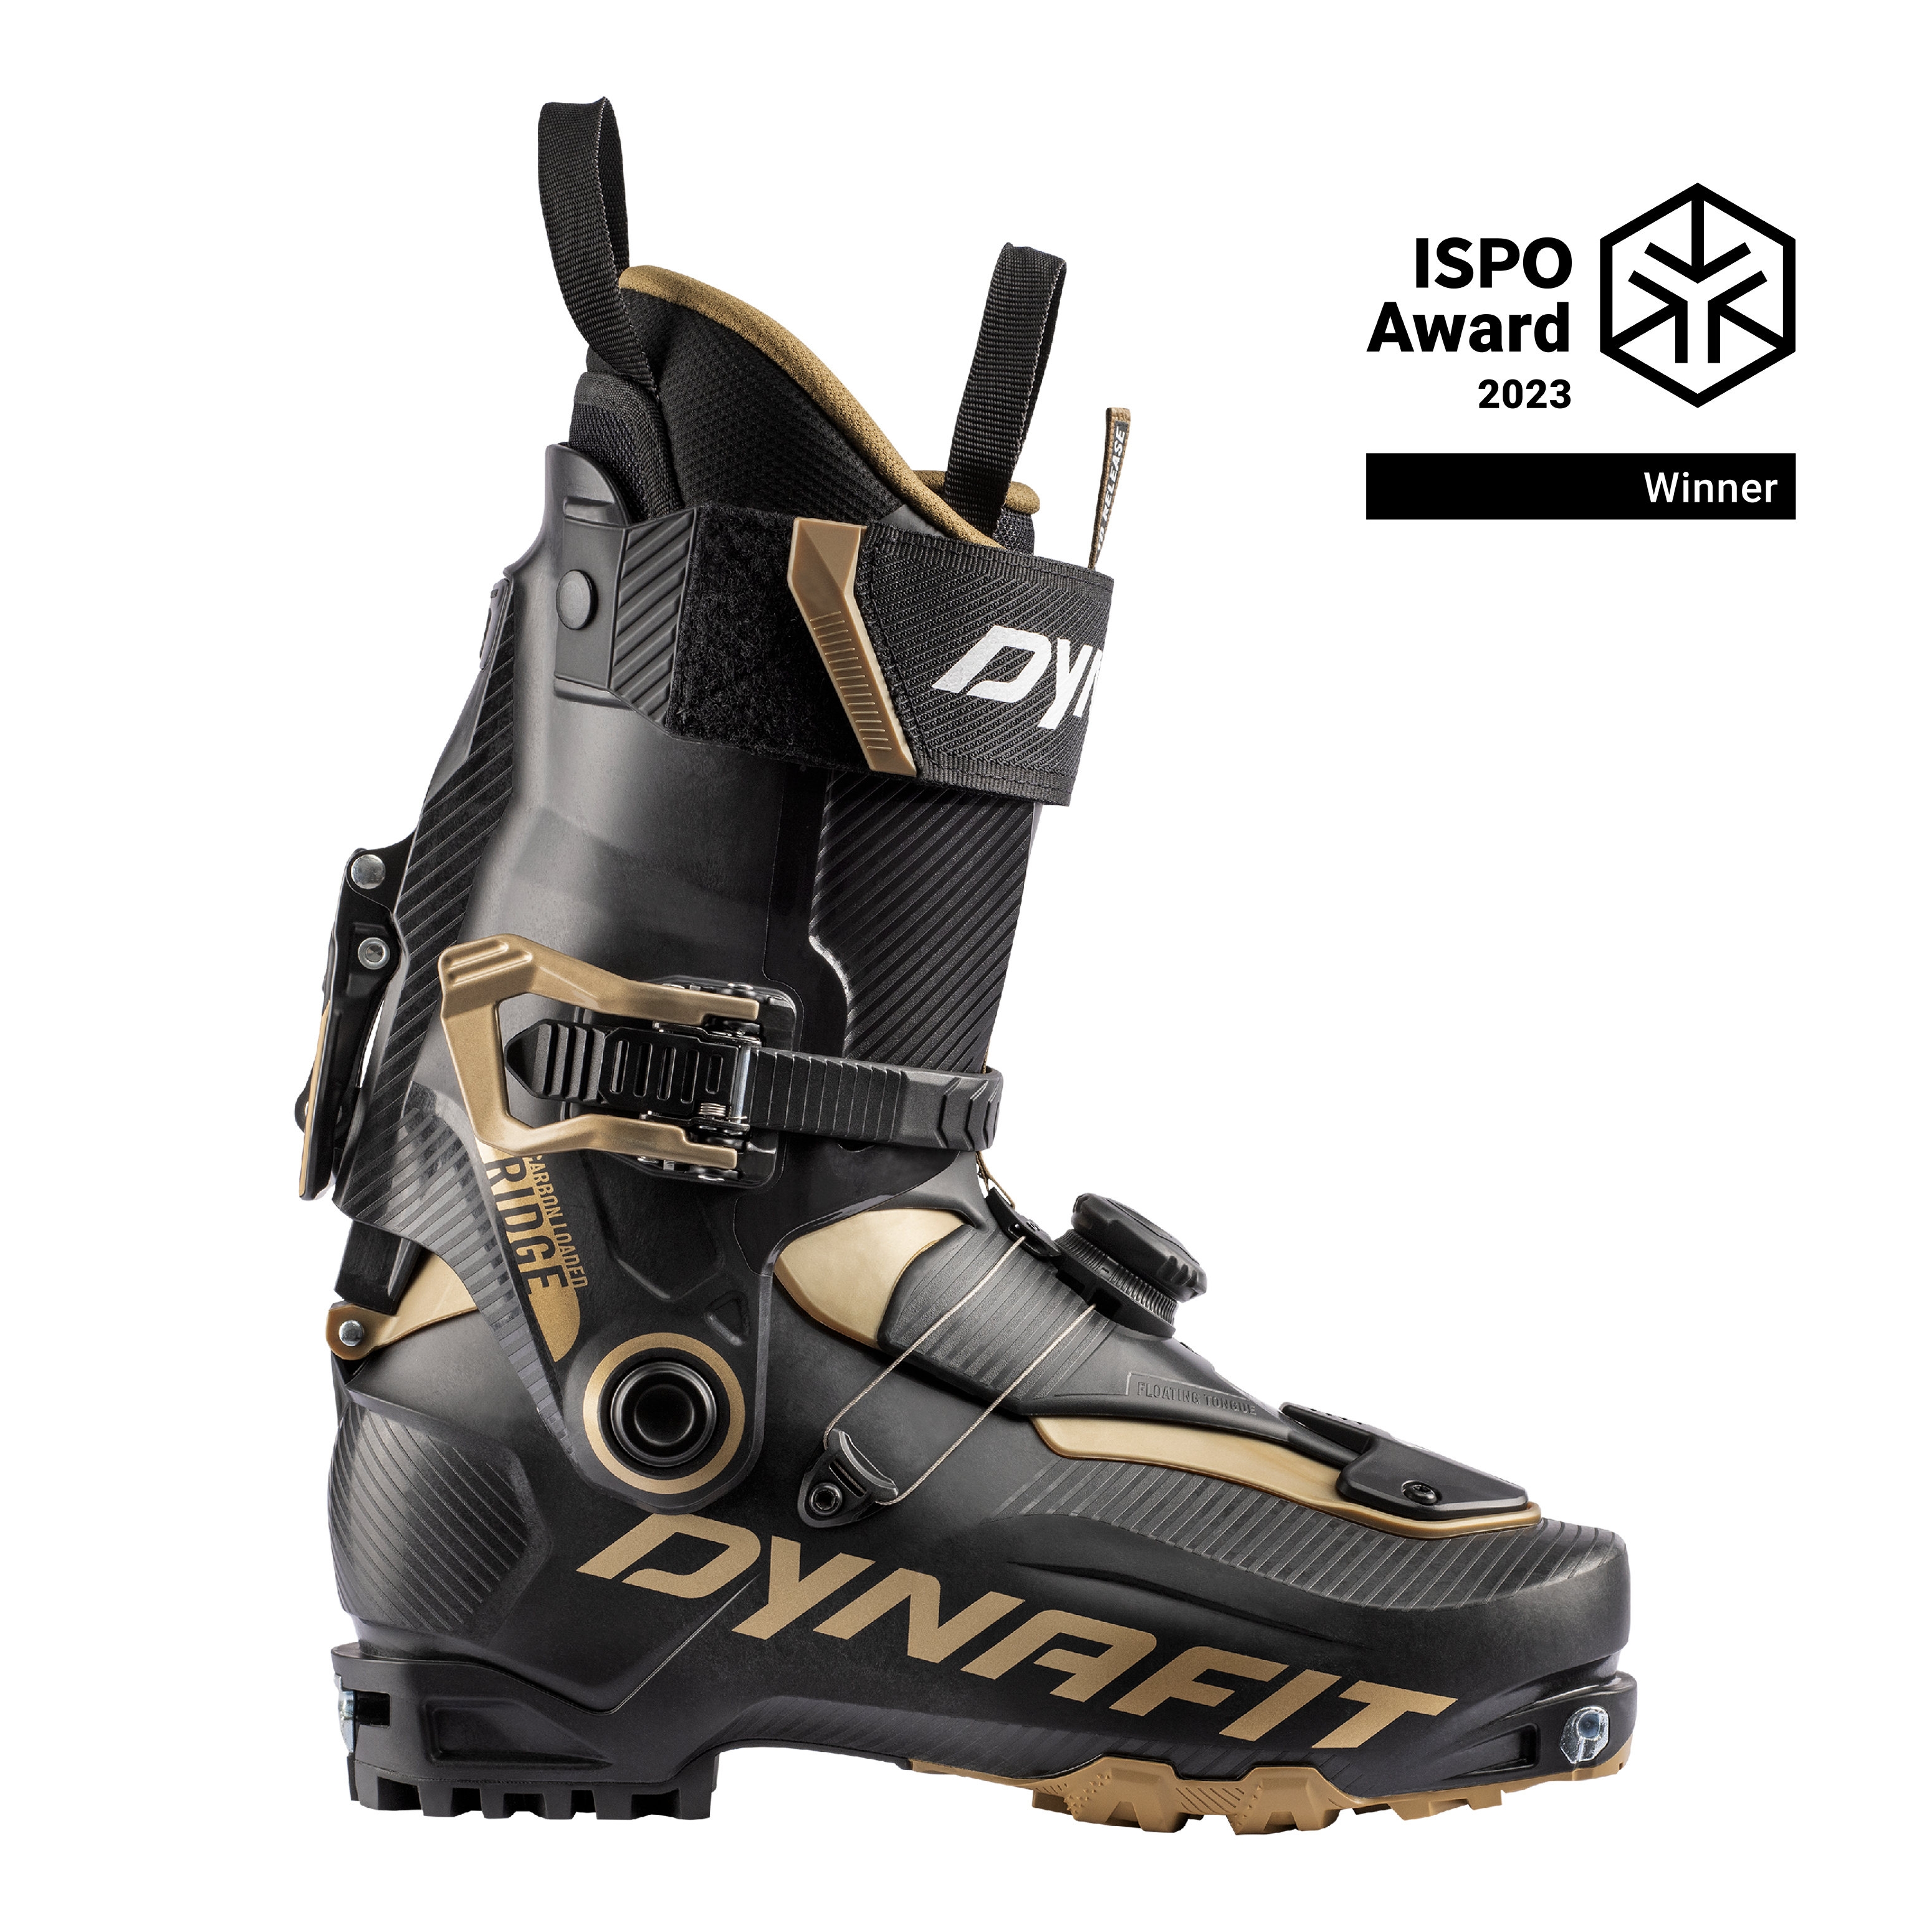 Chaussures de ski de rando Ridge Pro hommes